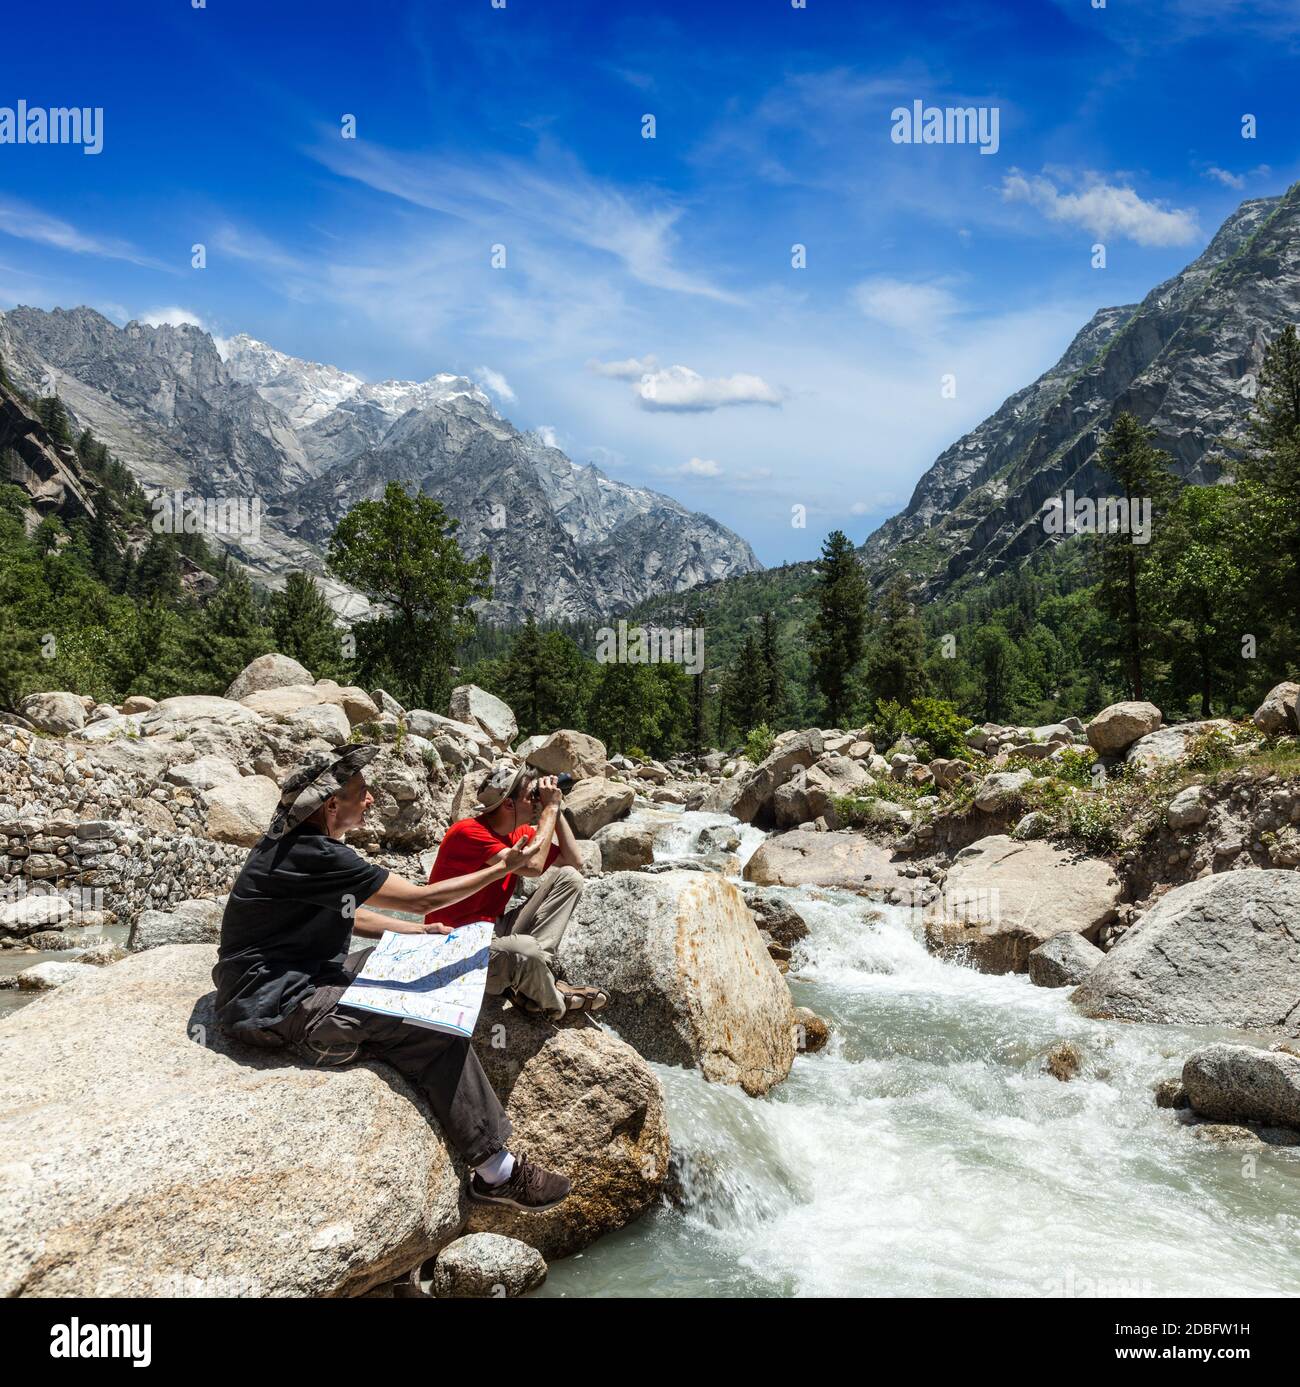 Hiker trekkers read a trekking map on trek in Himalayas mountains. Himachal Pradesh,India Stock Photo